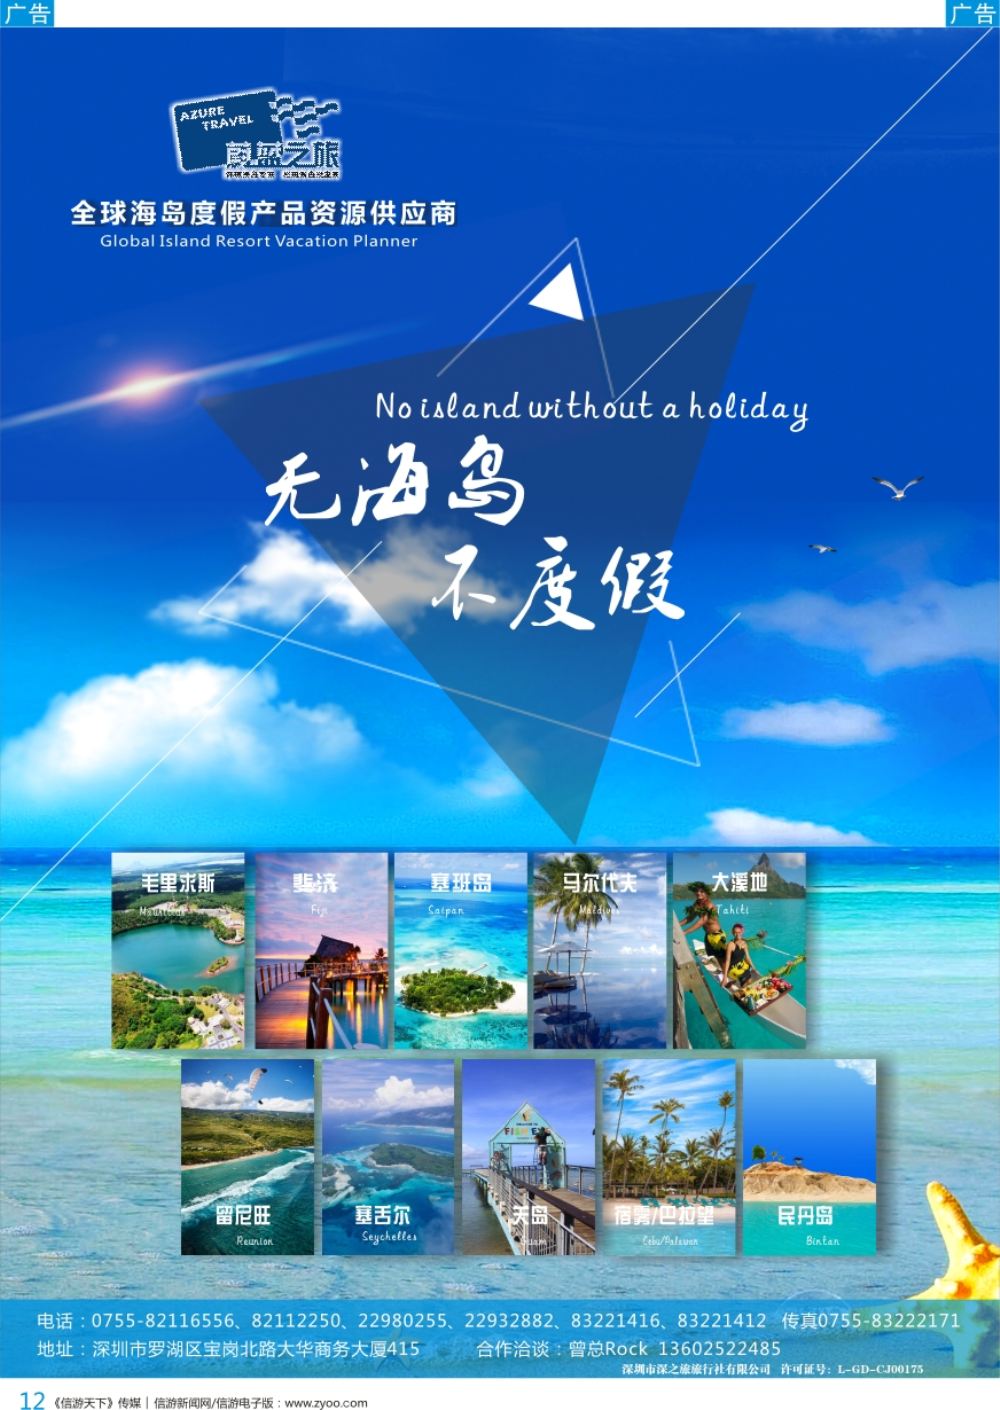 b彩012  蔚蓝之旅—全球海岛度假产品资源供应商